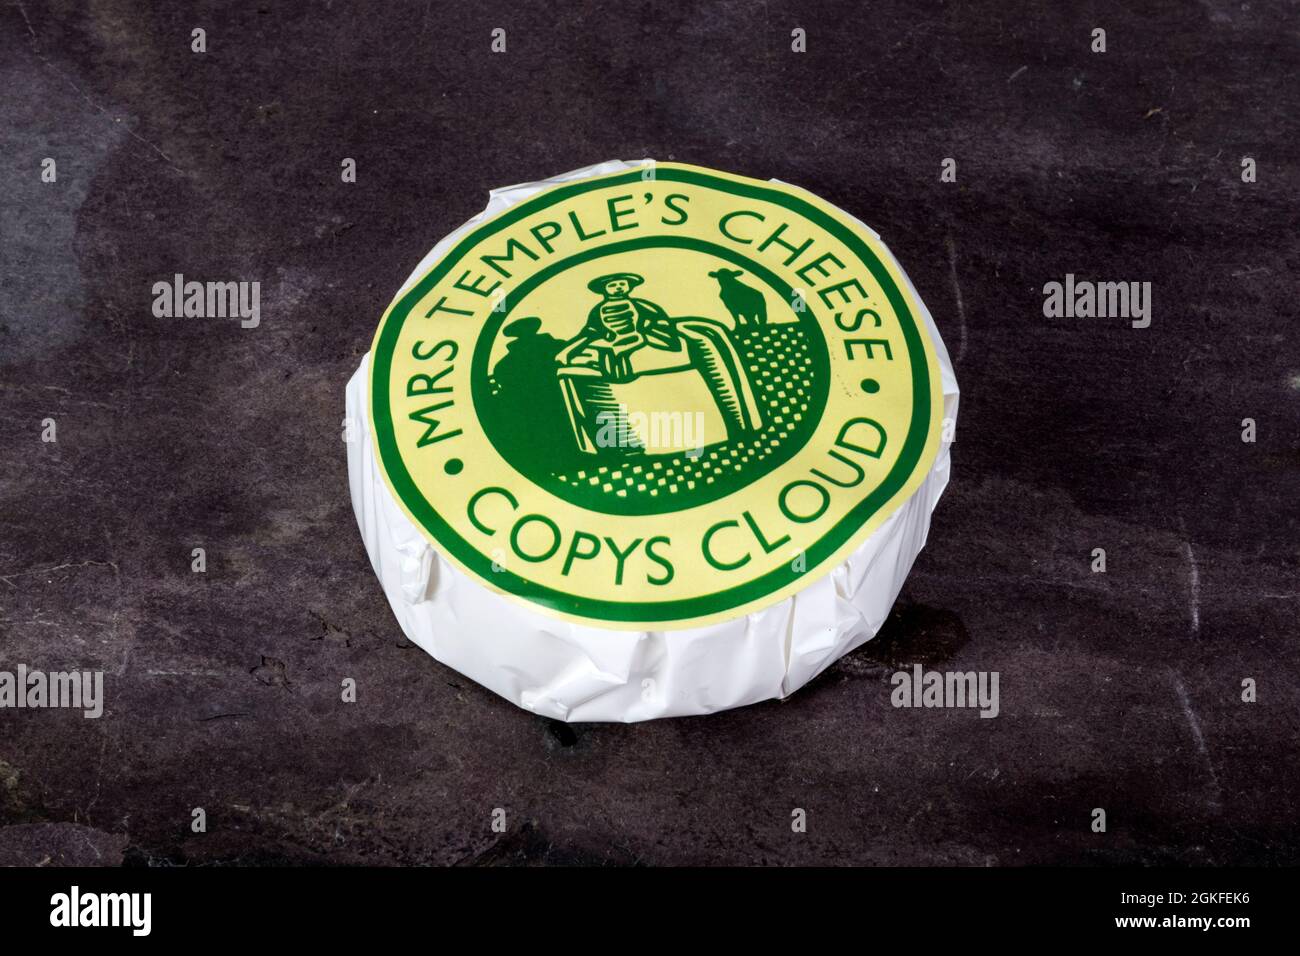 Mrs Temple's Copys Cloud Cheese von Copy's Green Farm in Wighton. Stockfoto